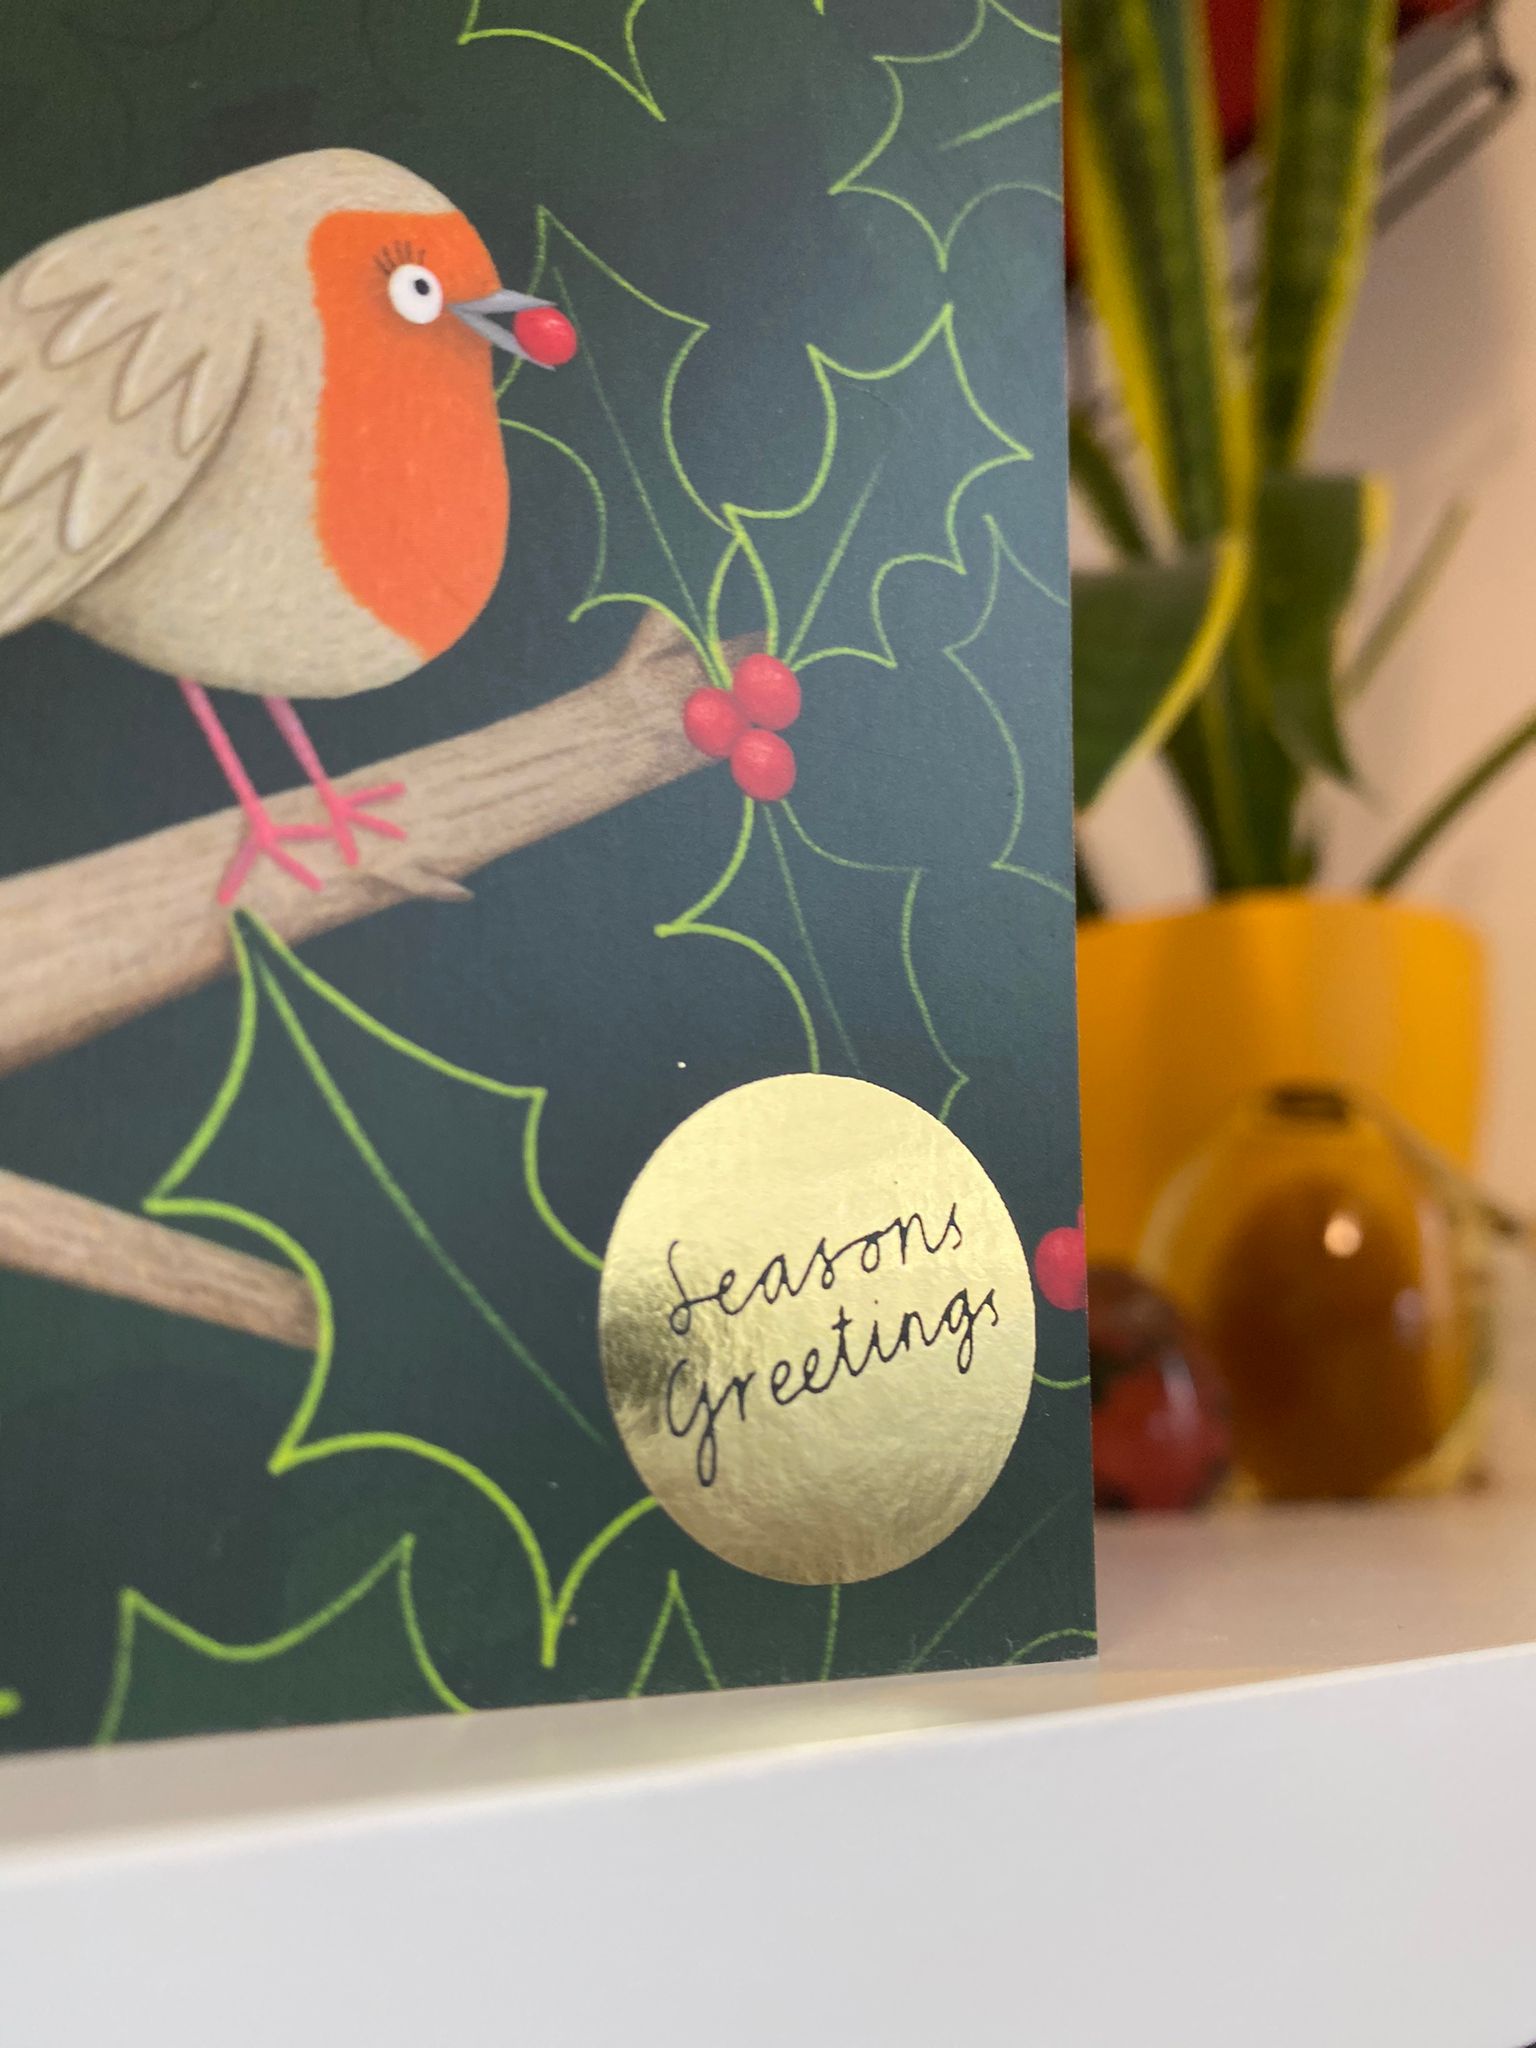 Rebecca Robin Christmas Card - Gold foil Season’s Greetings - 10x10cm card, planet-friendly!